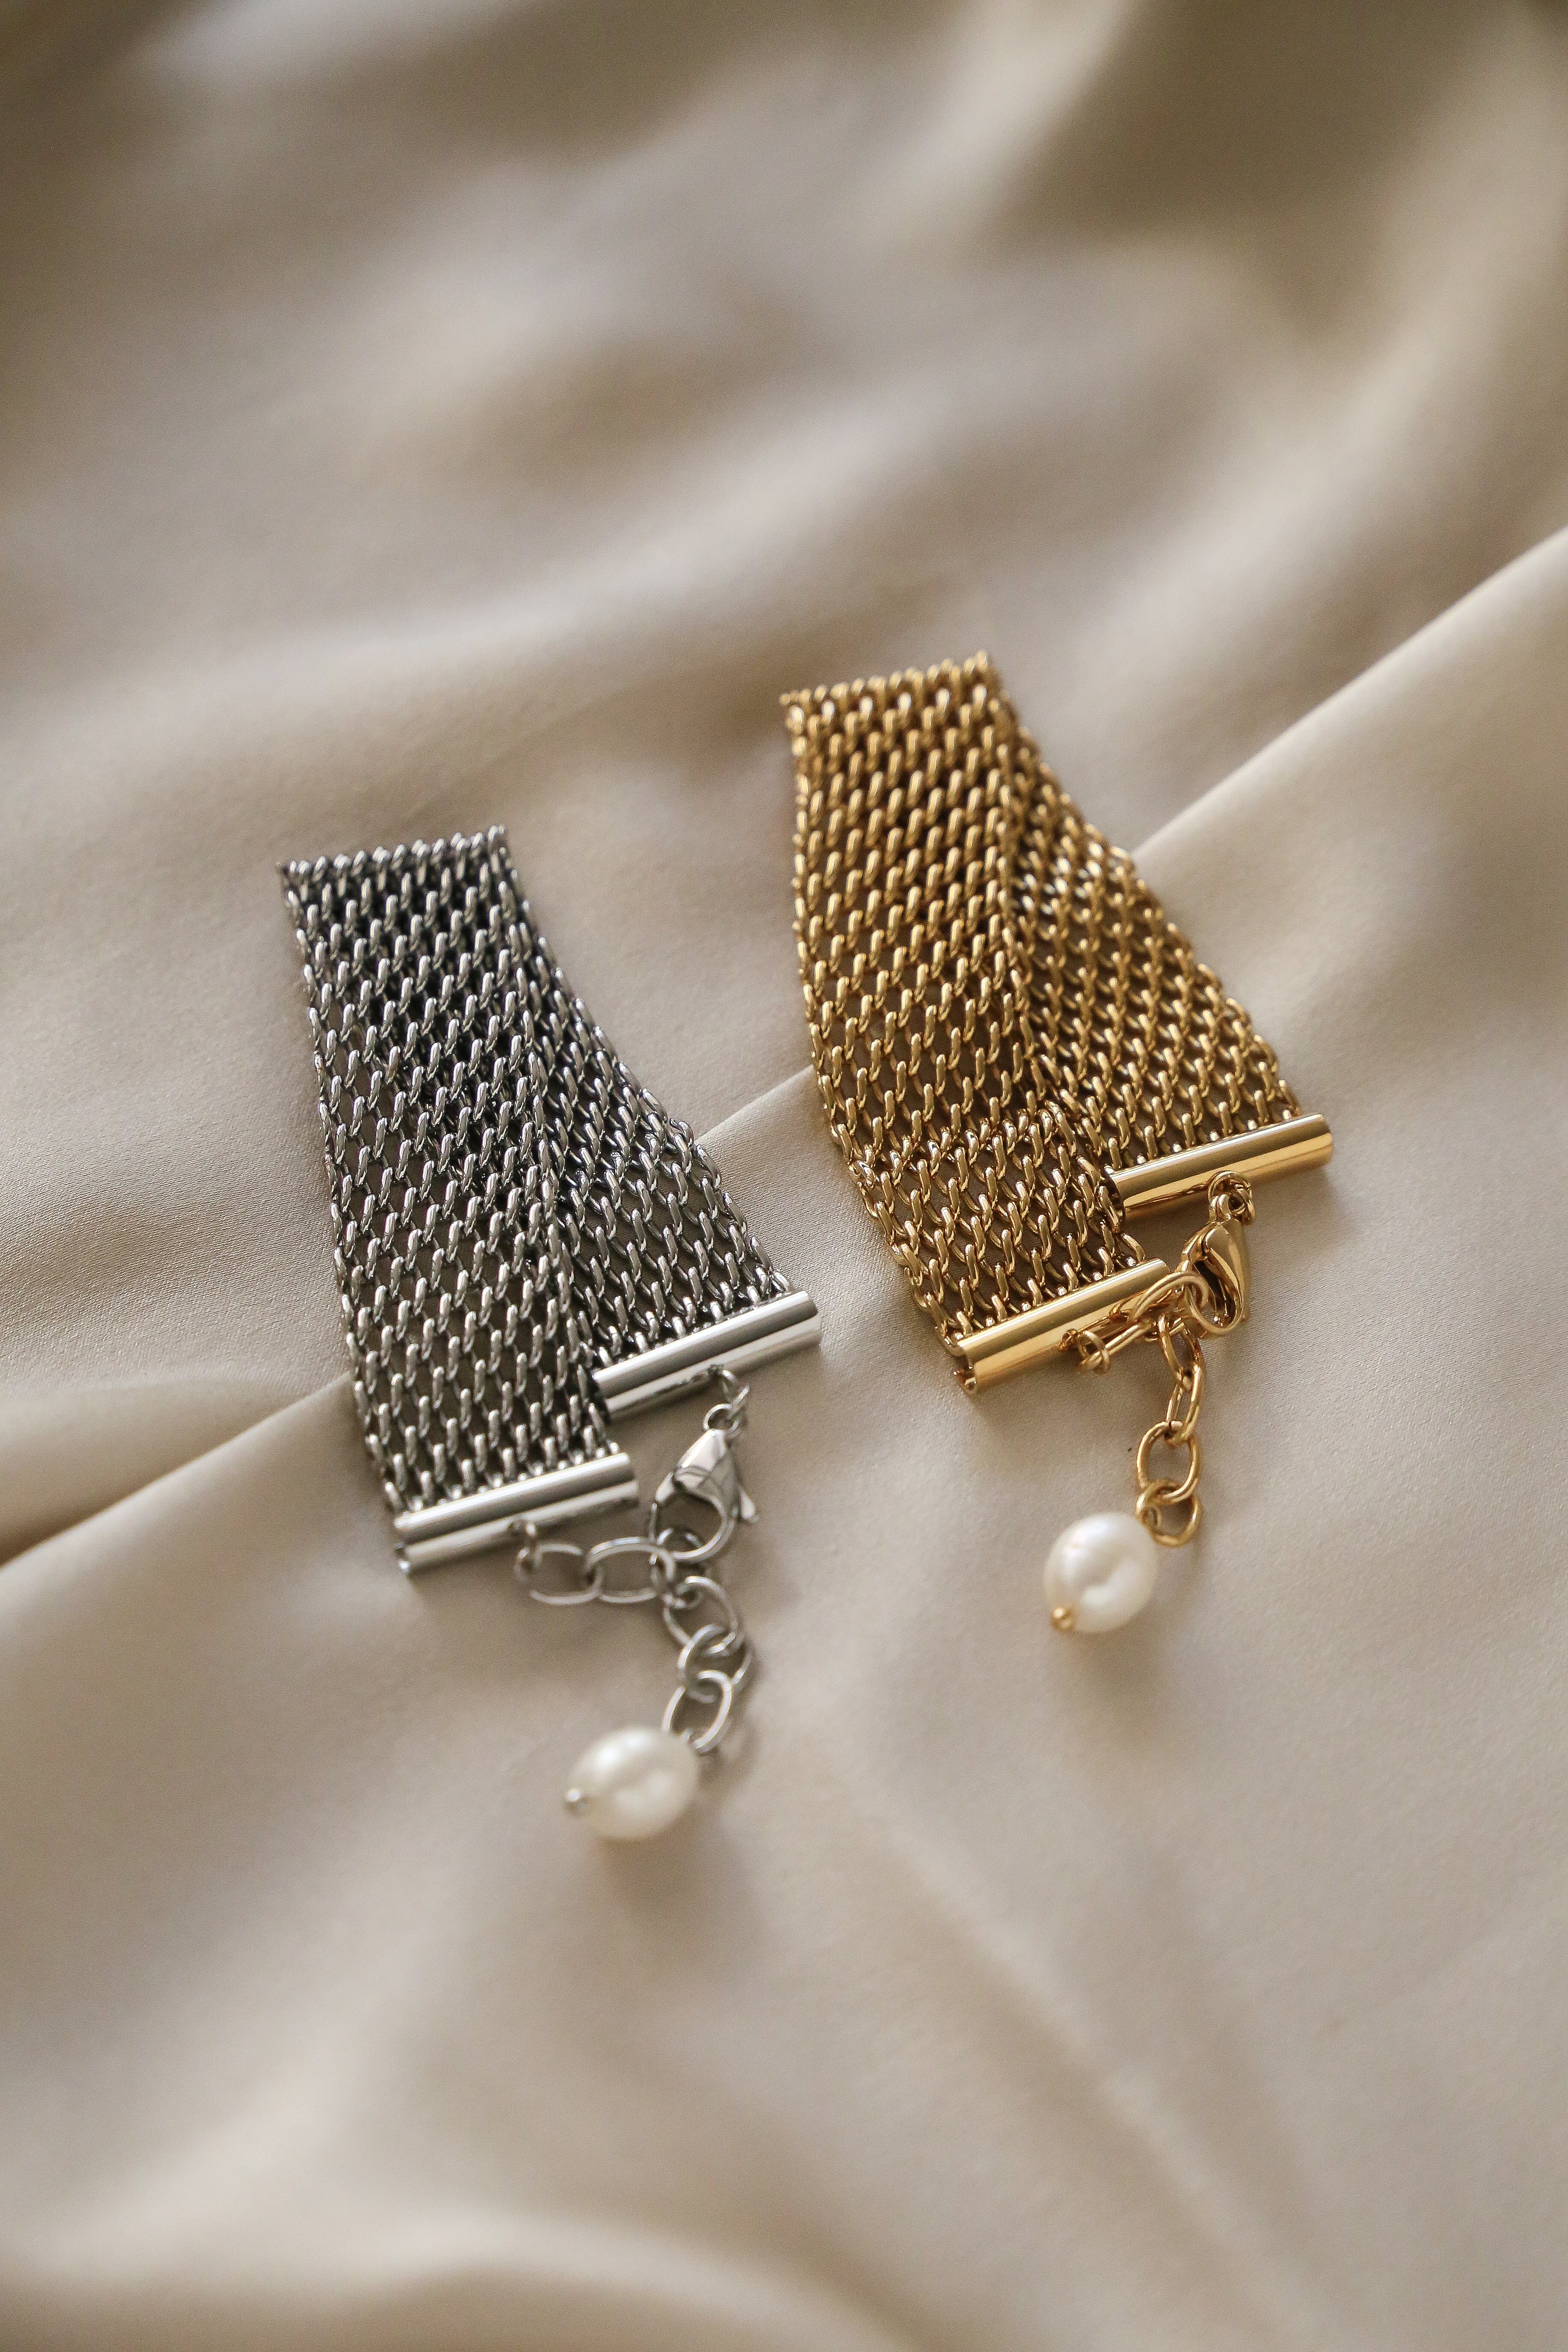 Noemi Bracelet - Boutique Minimaliste has waterproof, durable, elegant and vintage inspired jewelry